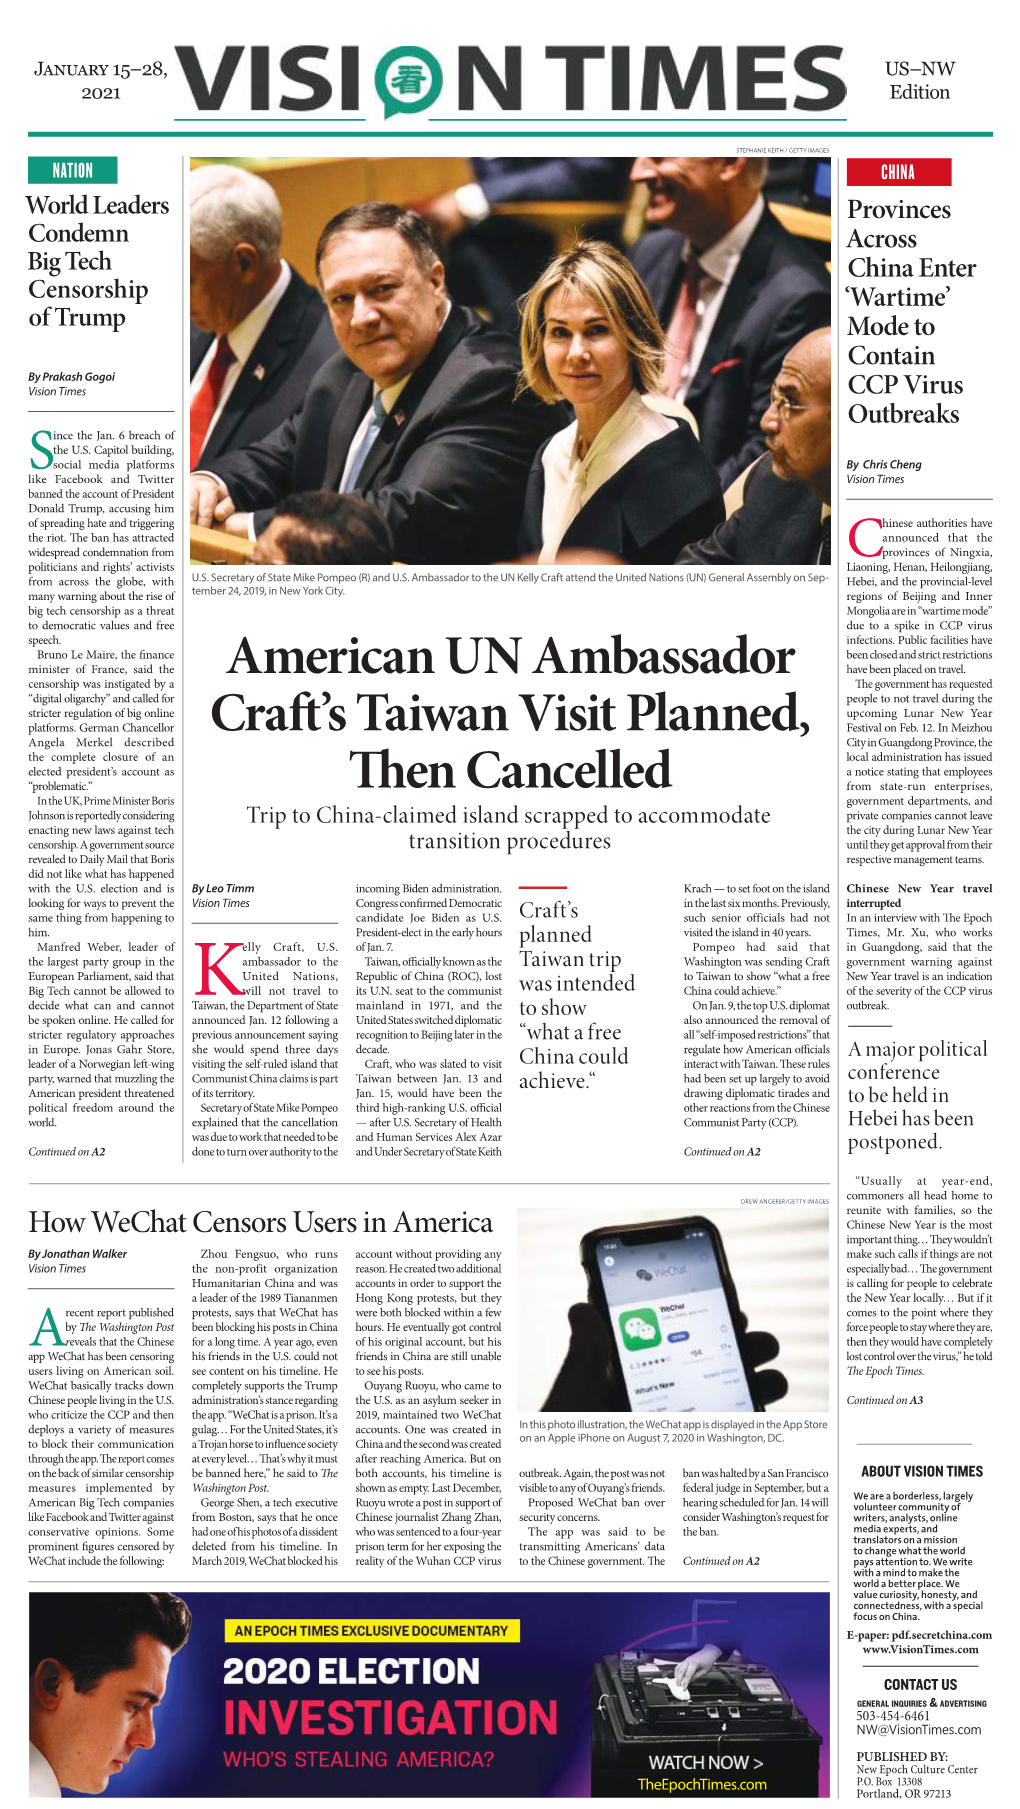 American UN Ambassador Craft's Taiwan Visit Planned, Then